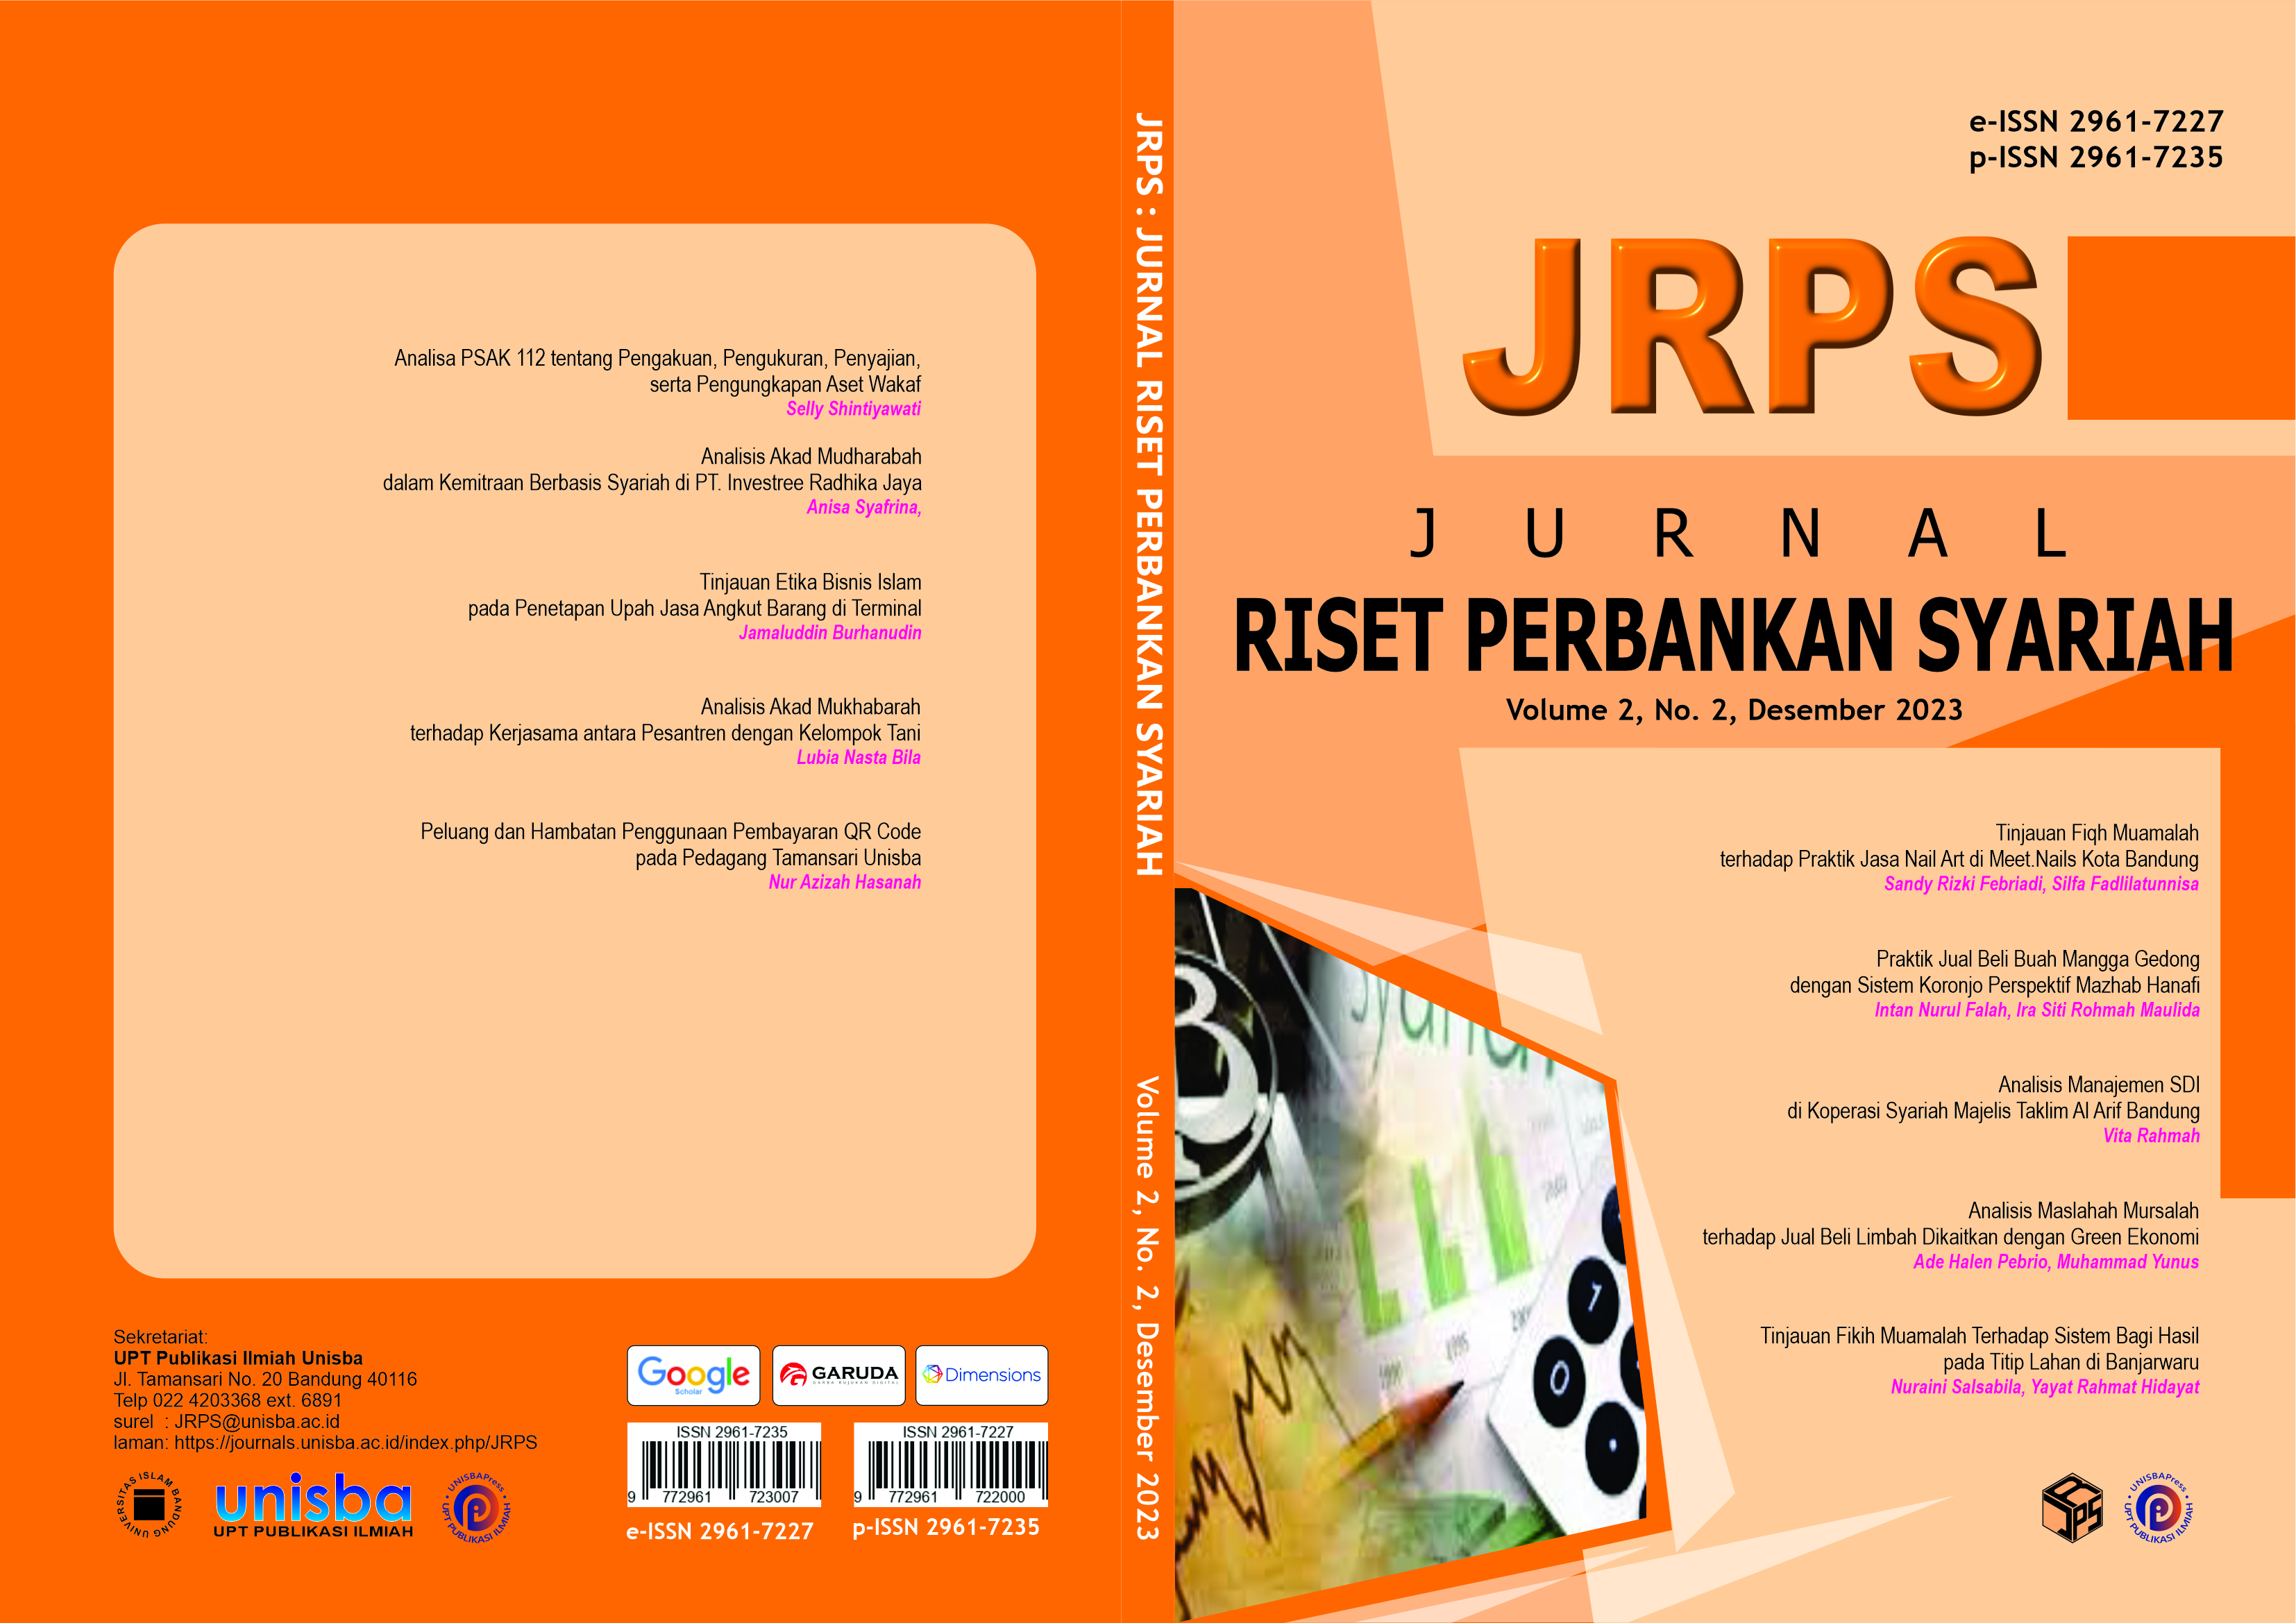 					View Volume 2, No. 2, Desember 2023, Jurnal Riset Perbankan Syariah (JRPS)
				